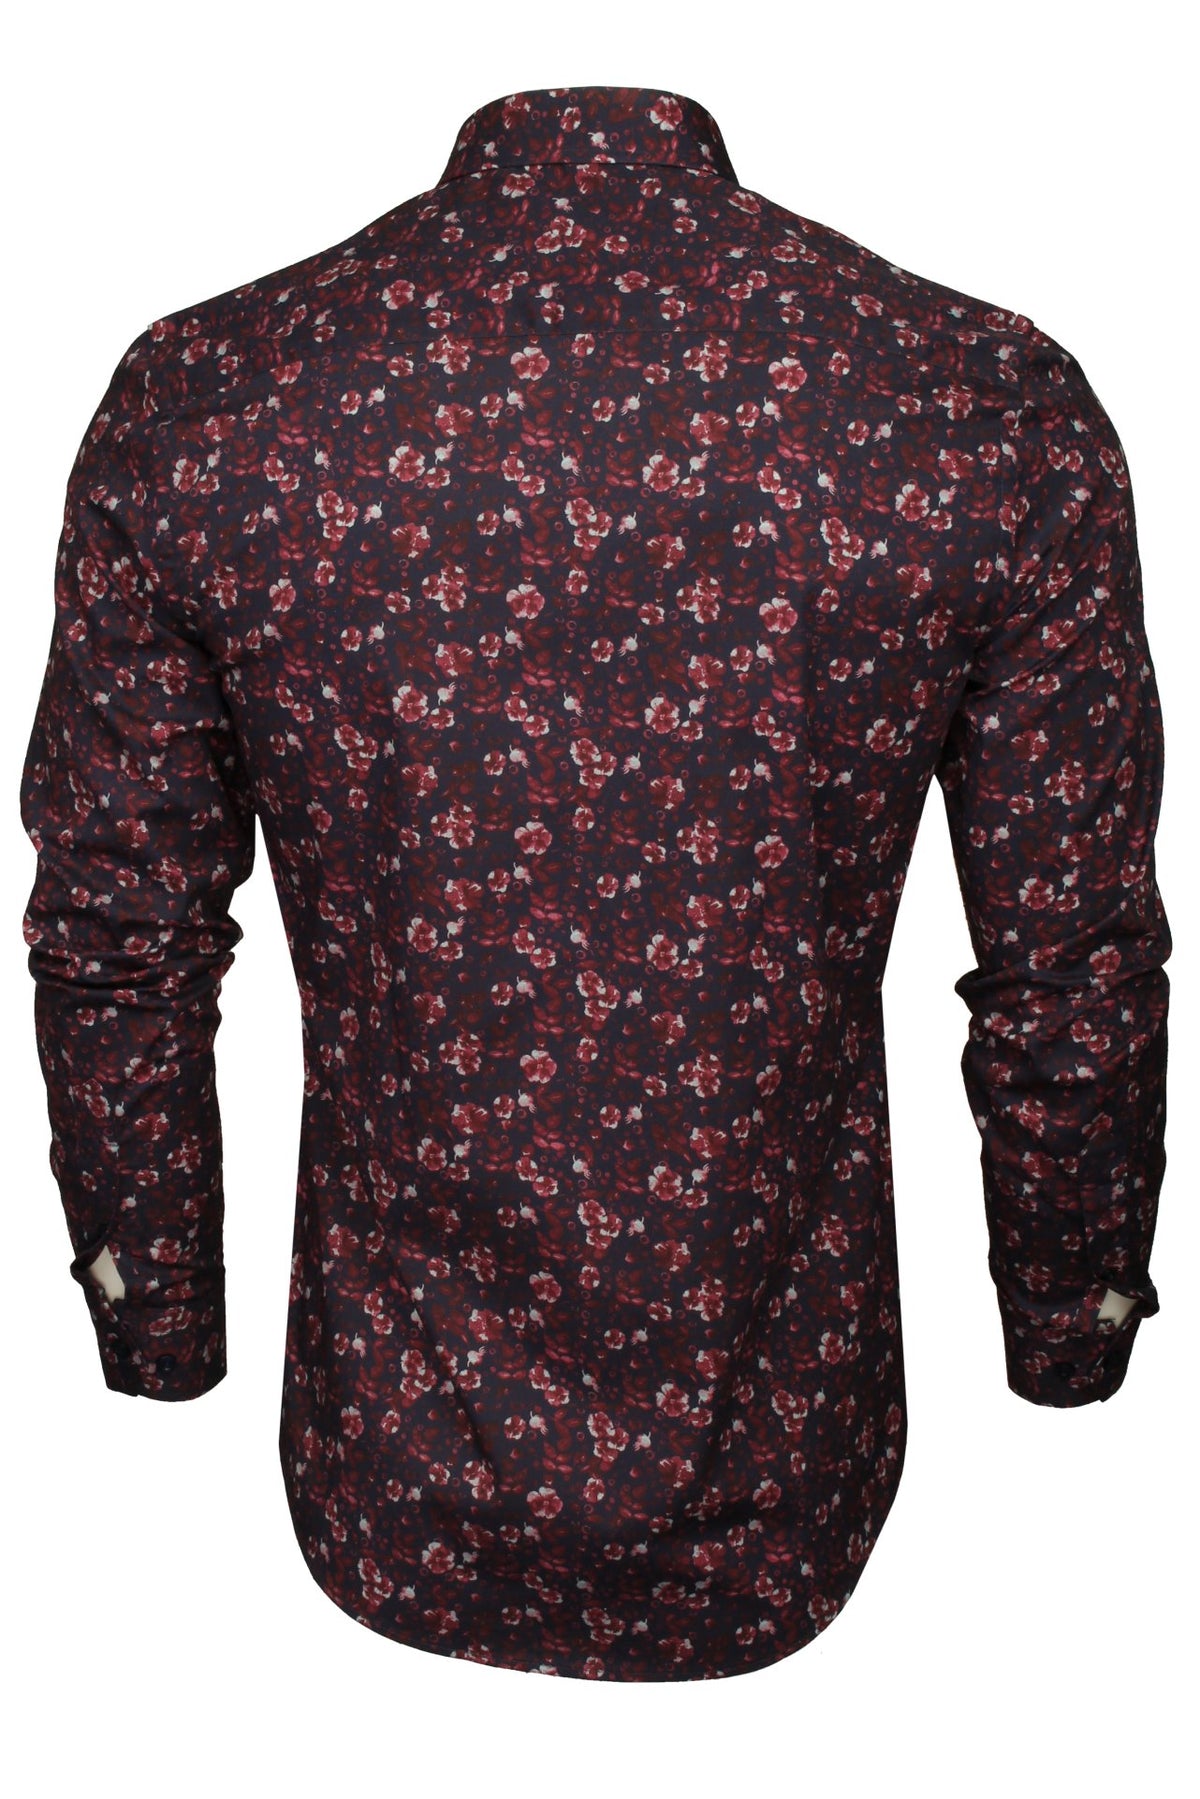 Xact Mens Floral Long Sleeved Shirt, 03, Xsh1089, Navy/ Burgundy